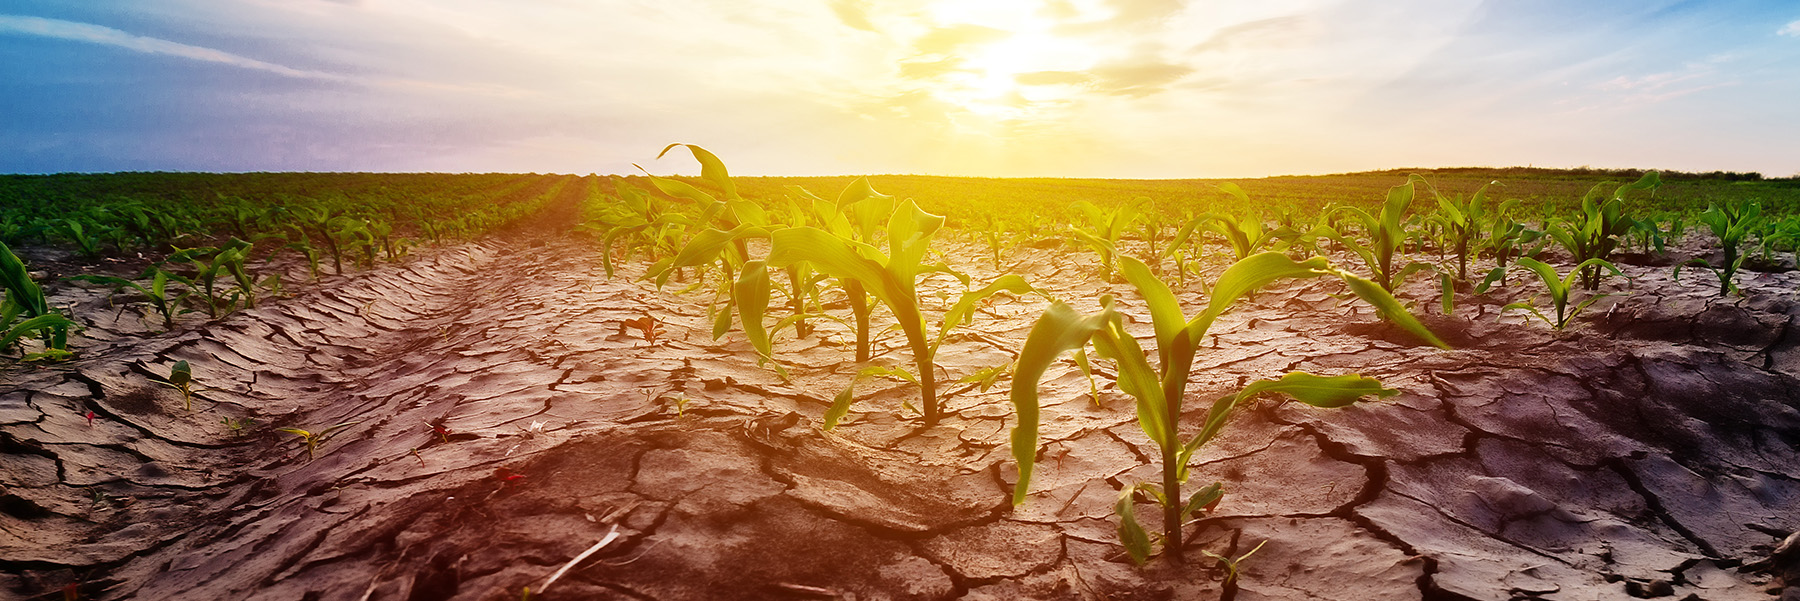 cornfield in a drought